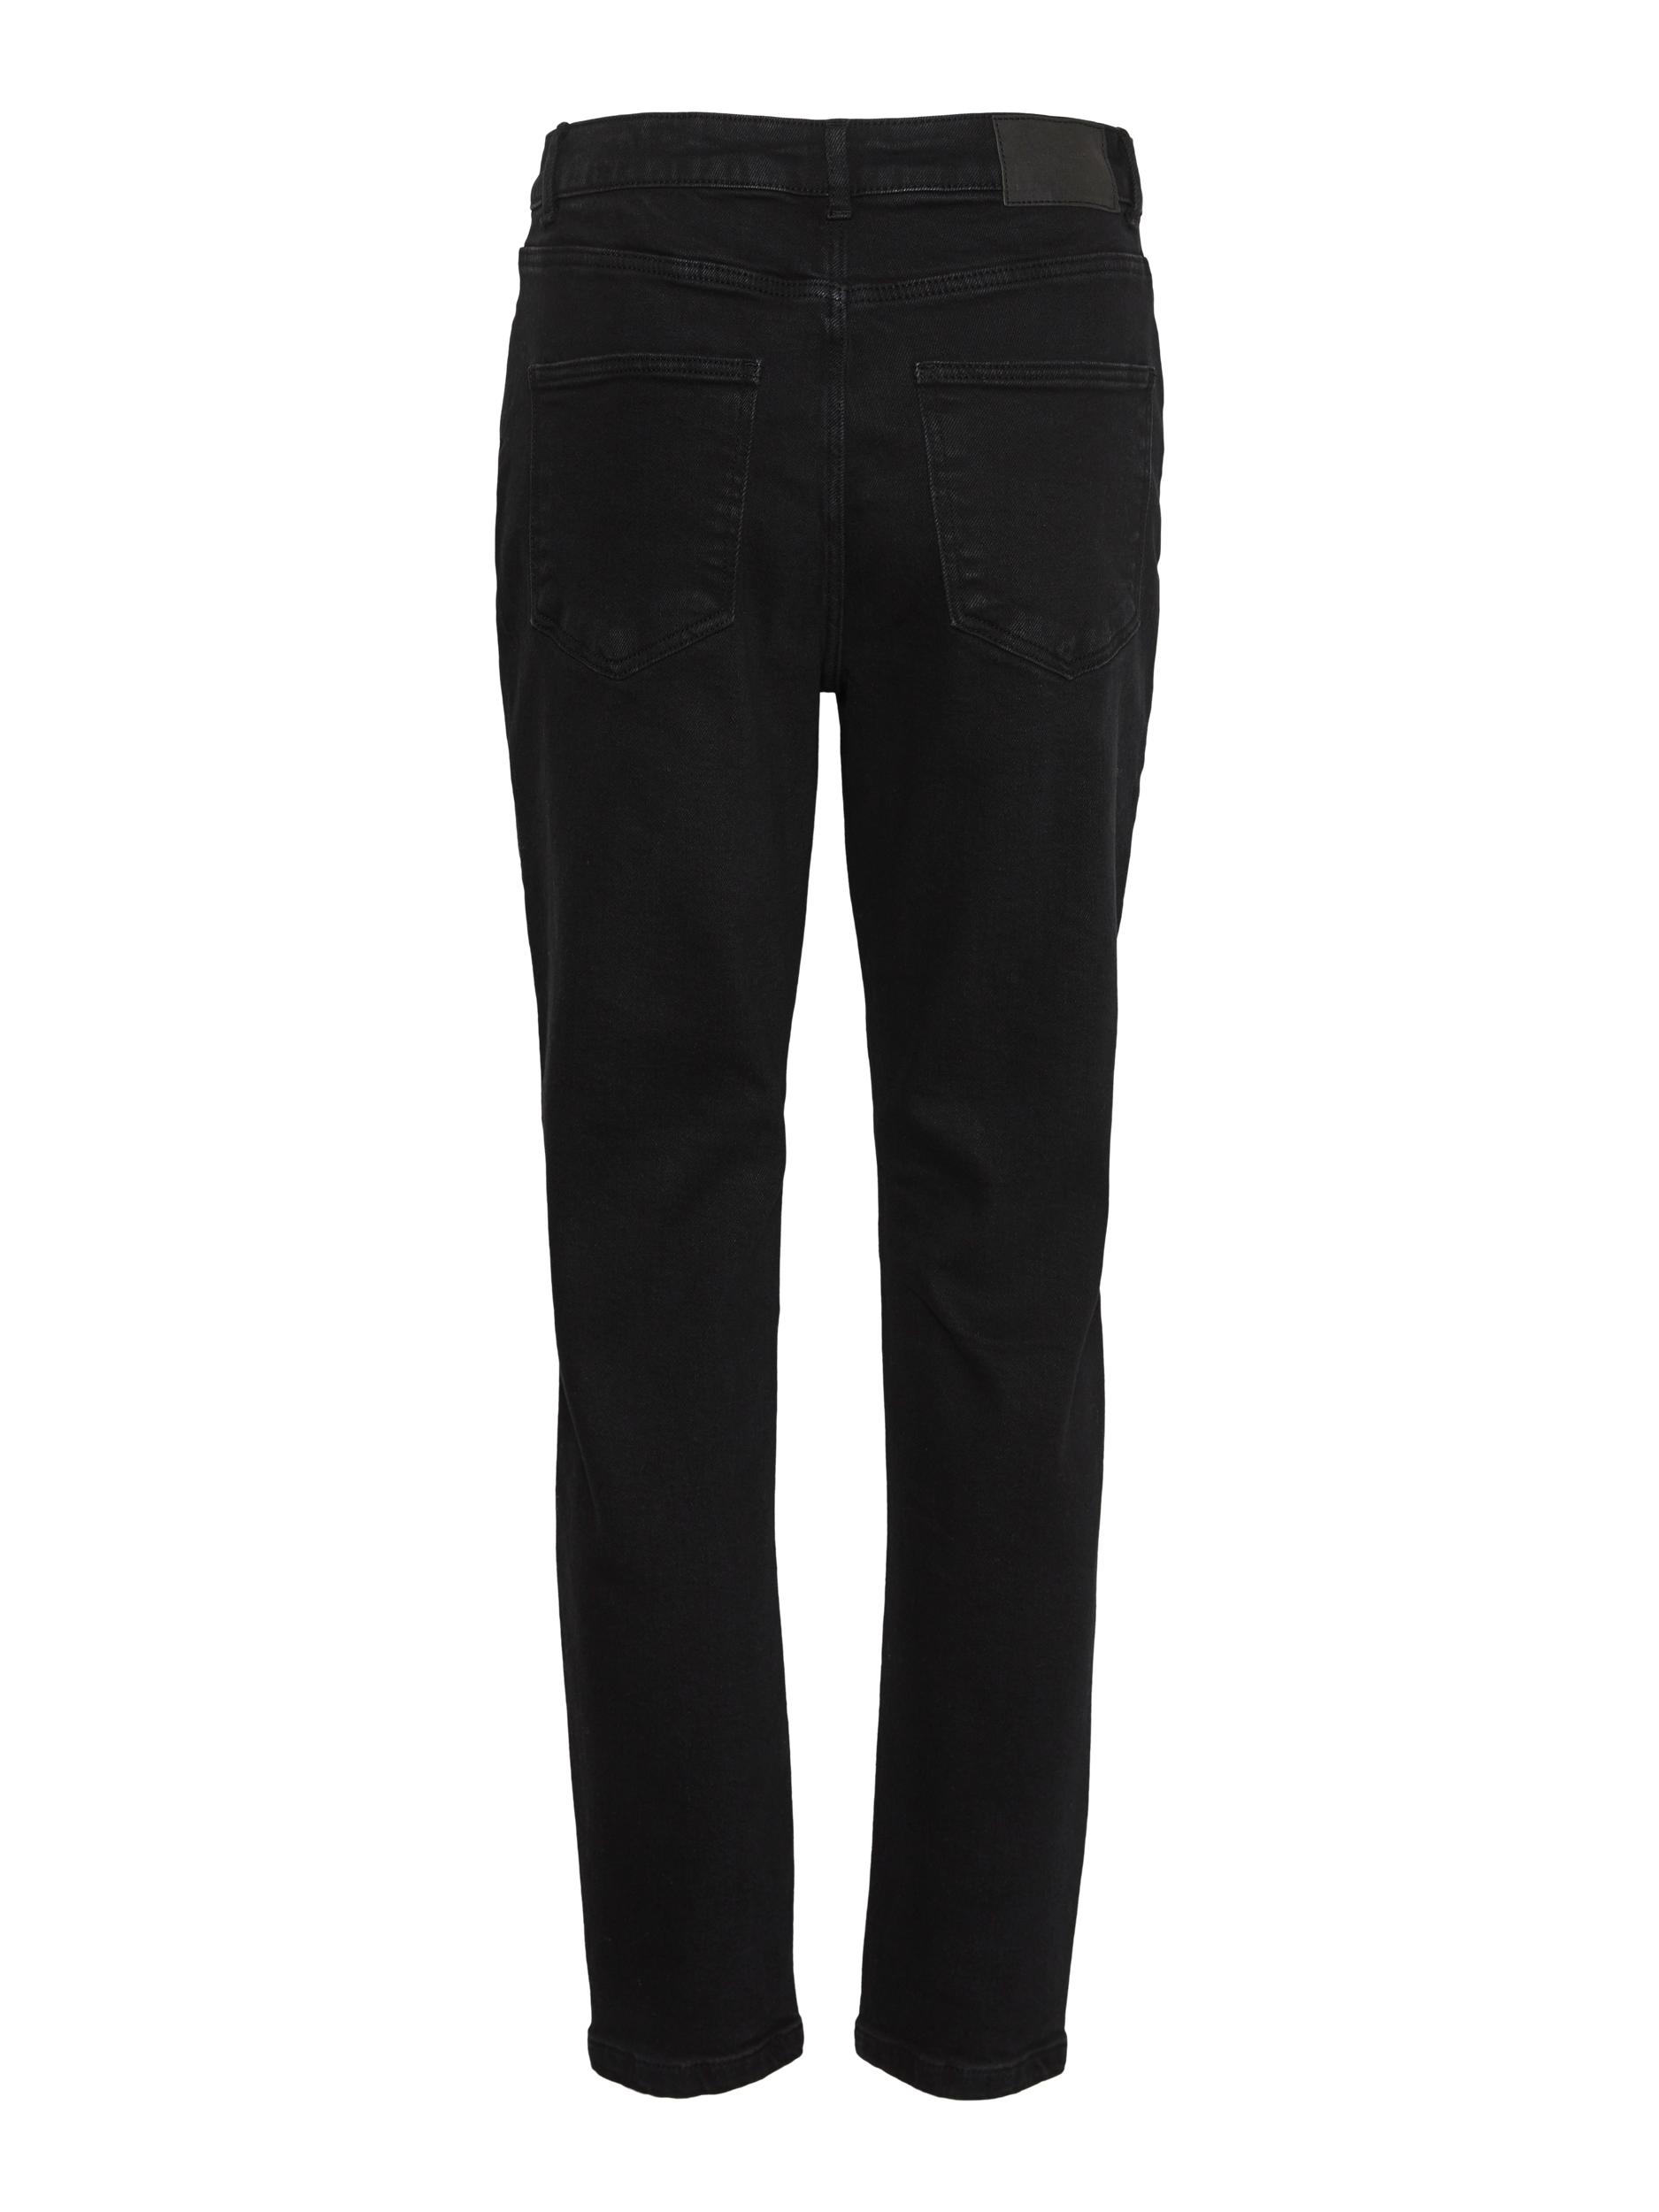 FINAL SALE - Joana high waist mom fit jeans, BLACK DENIM, large